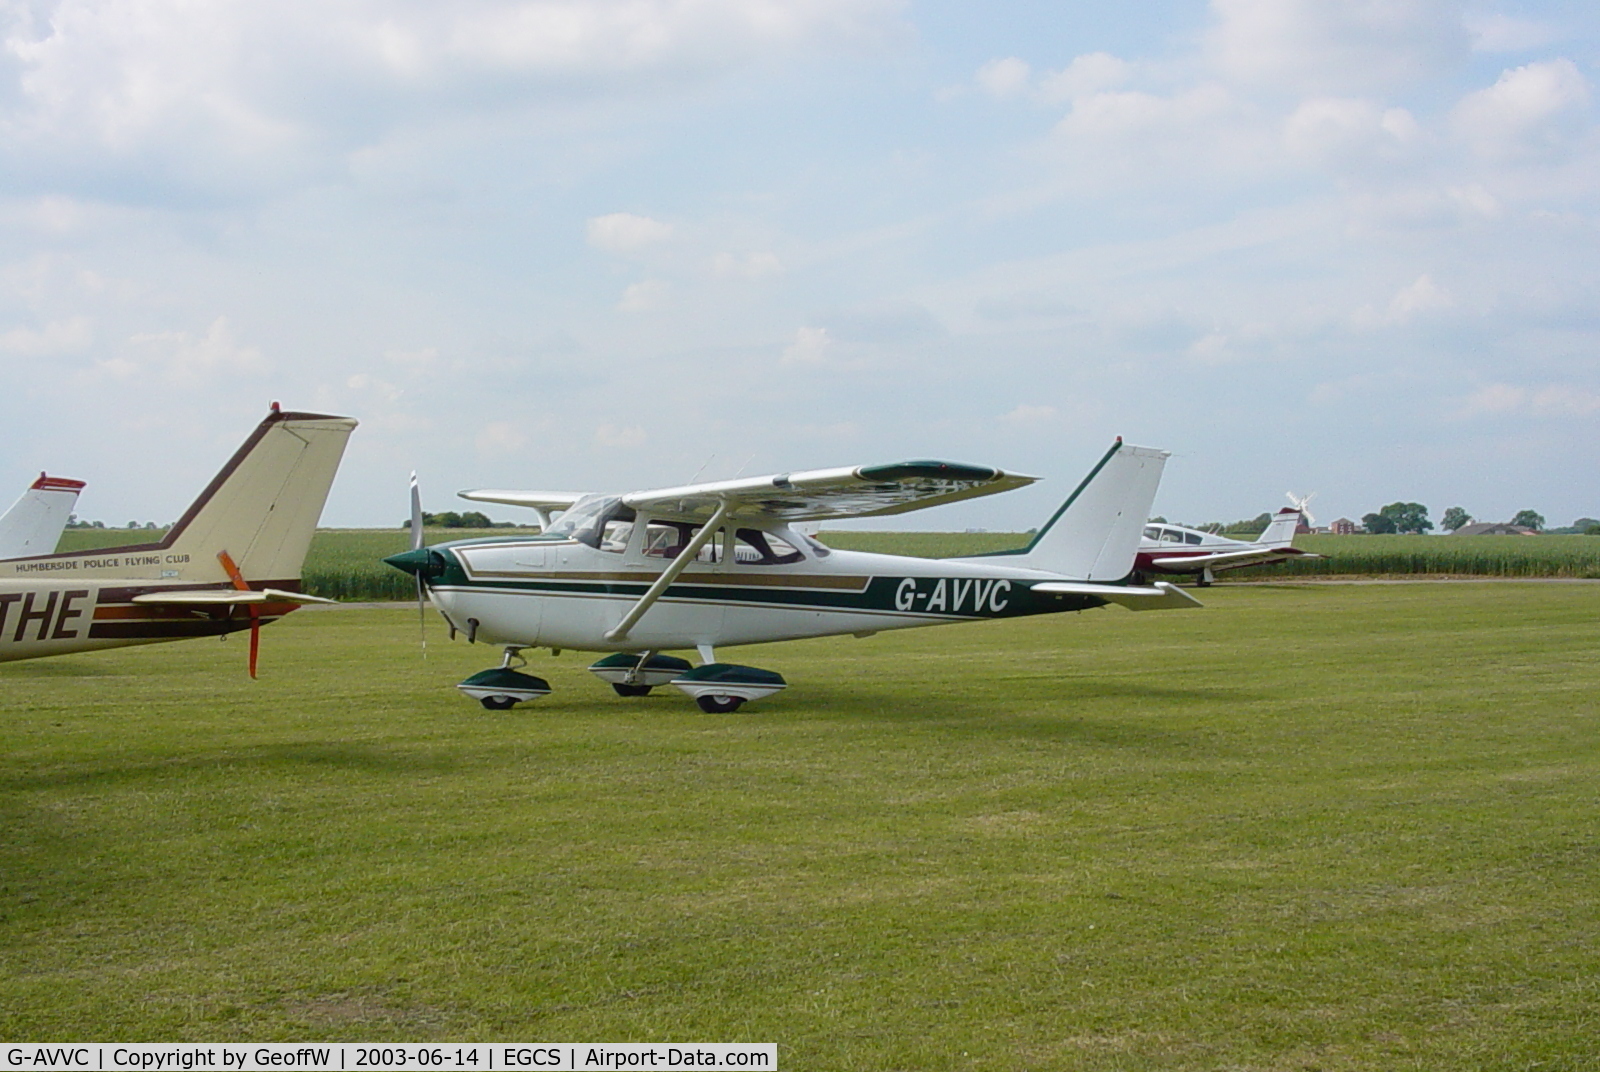 G-AVVC, 1967 Reims F172H Skyhawk C/N 0443, Cessna F172H G-AVVC at Sturgate 14.06.2003